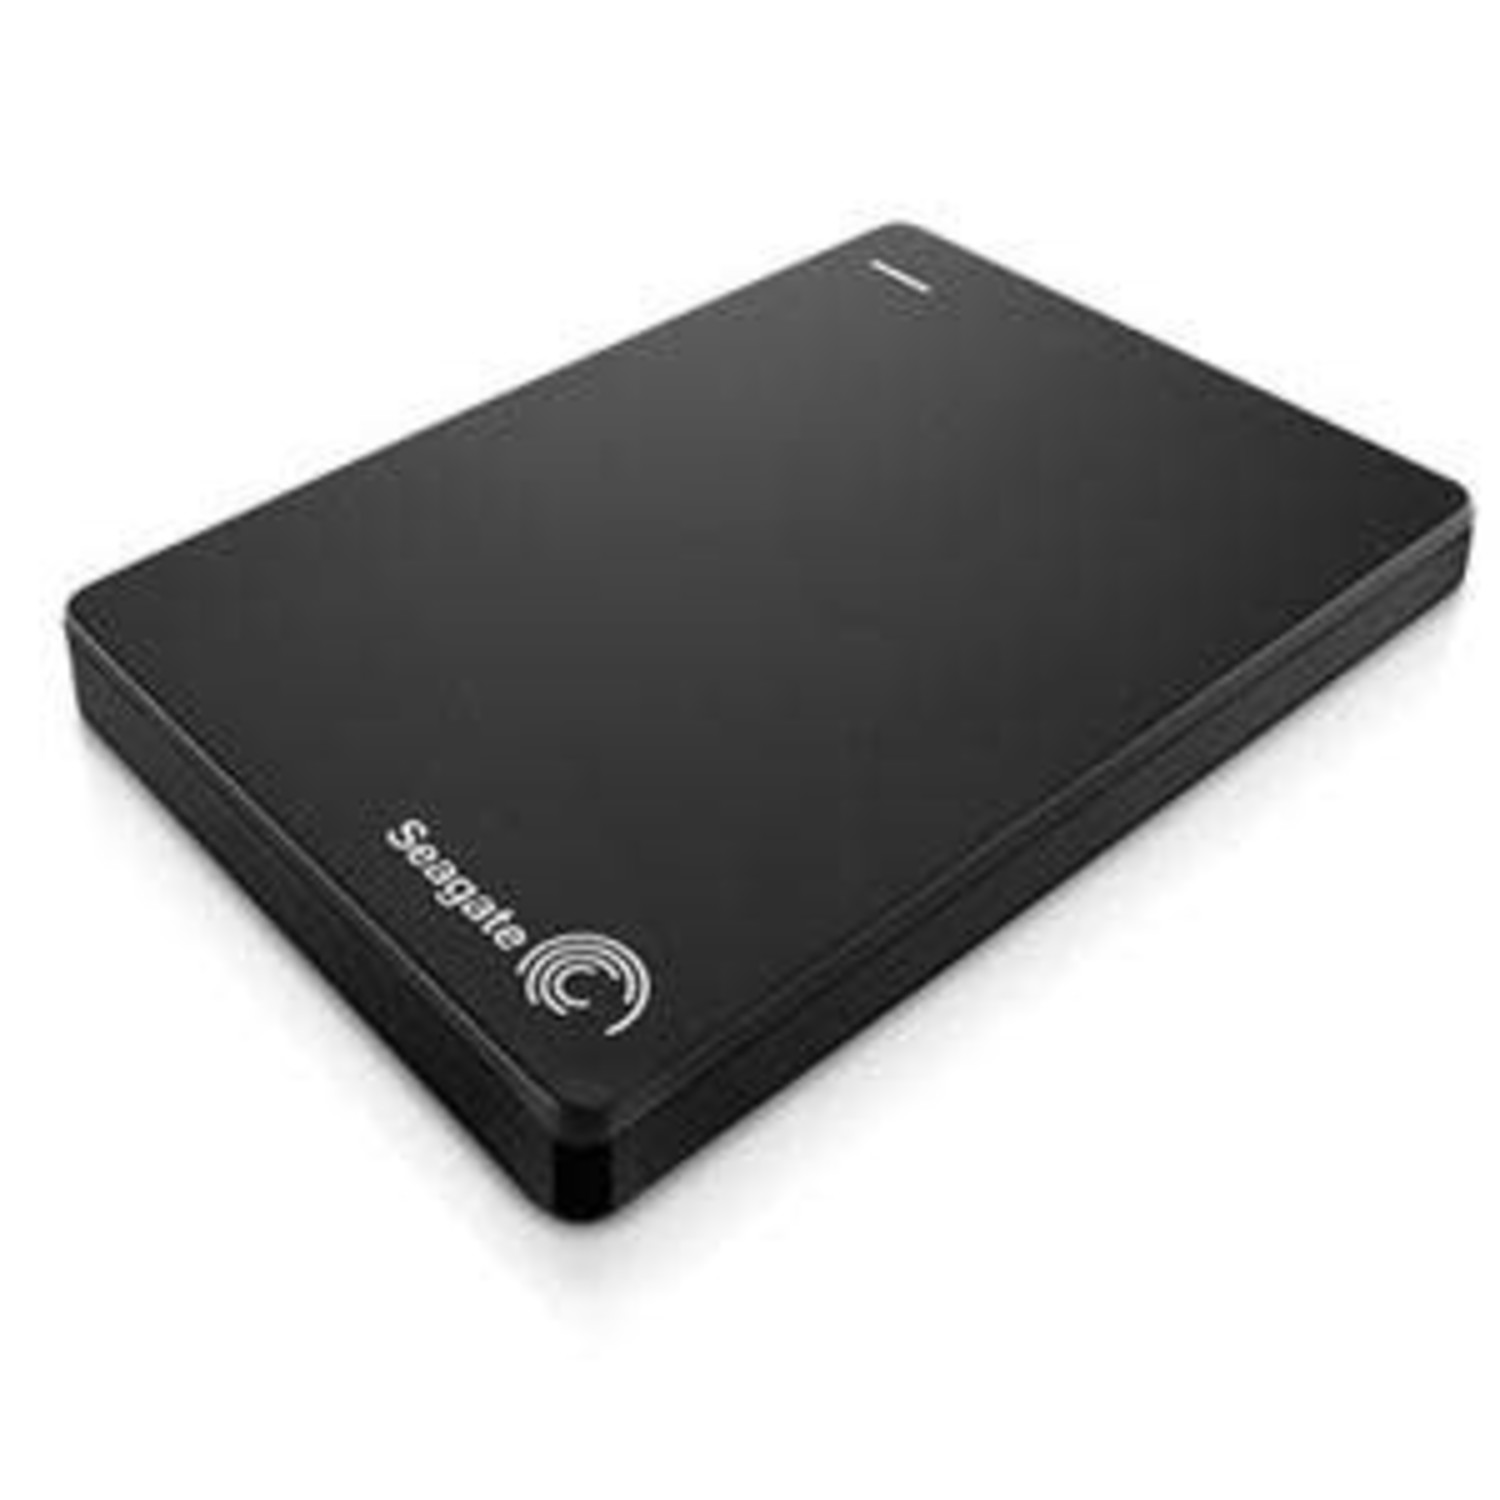 Seagate Backup Plus Slim STDR1000100 1 TB 2.5" External Hard Drive - Black - kite+key, Rutgers Store